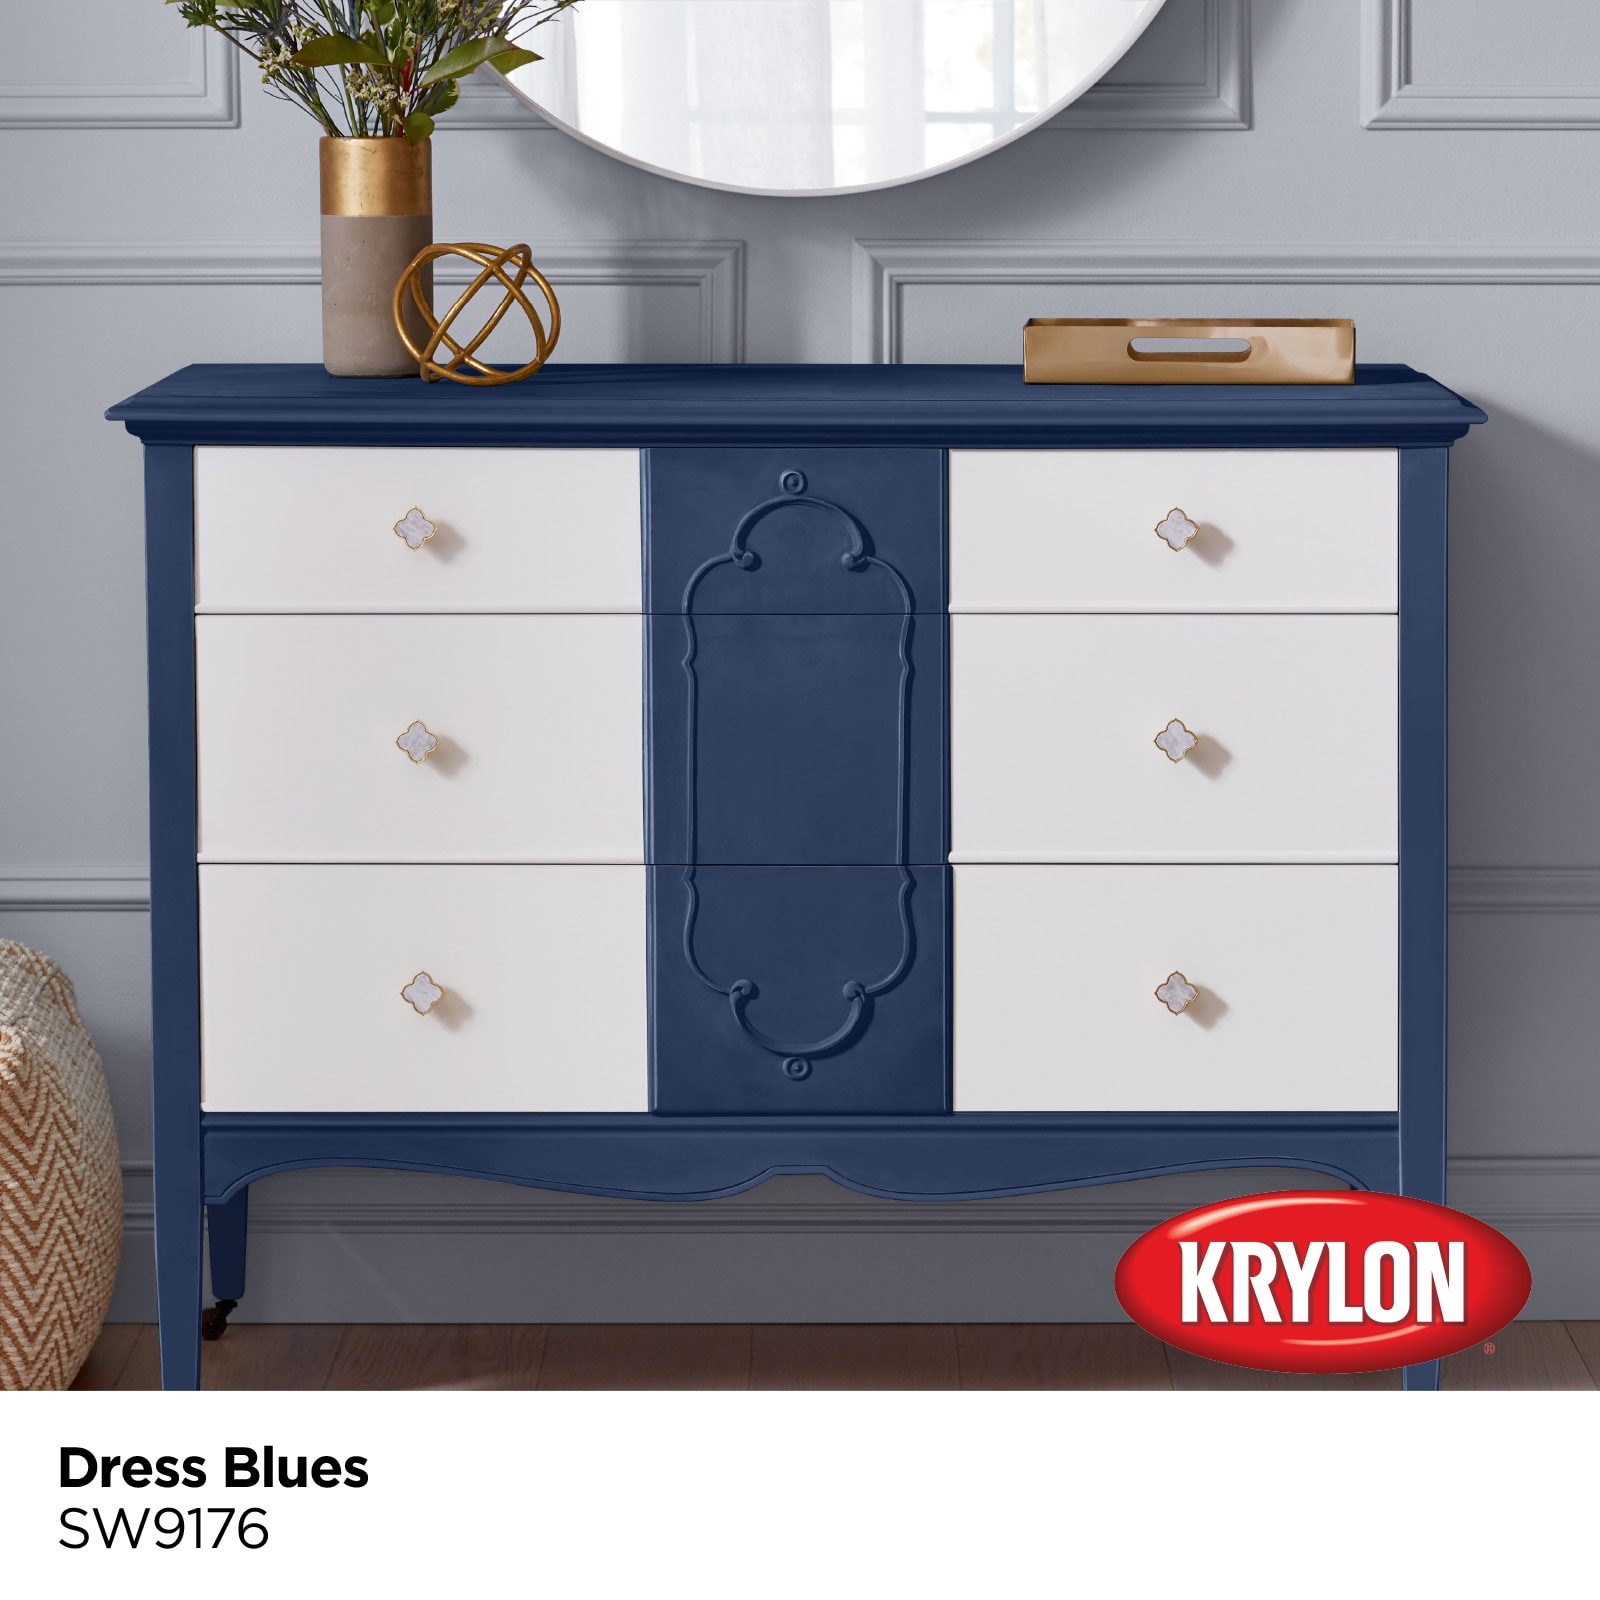 Krylon Dress Blues Sw9176 Water-based Chalky Paint (1-Quart) in